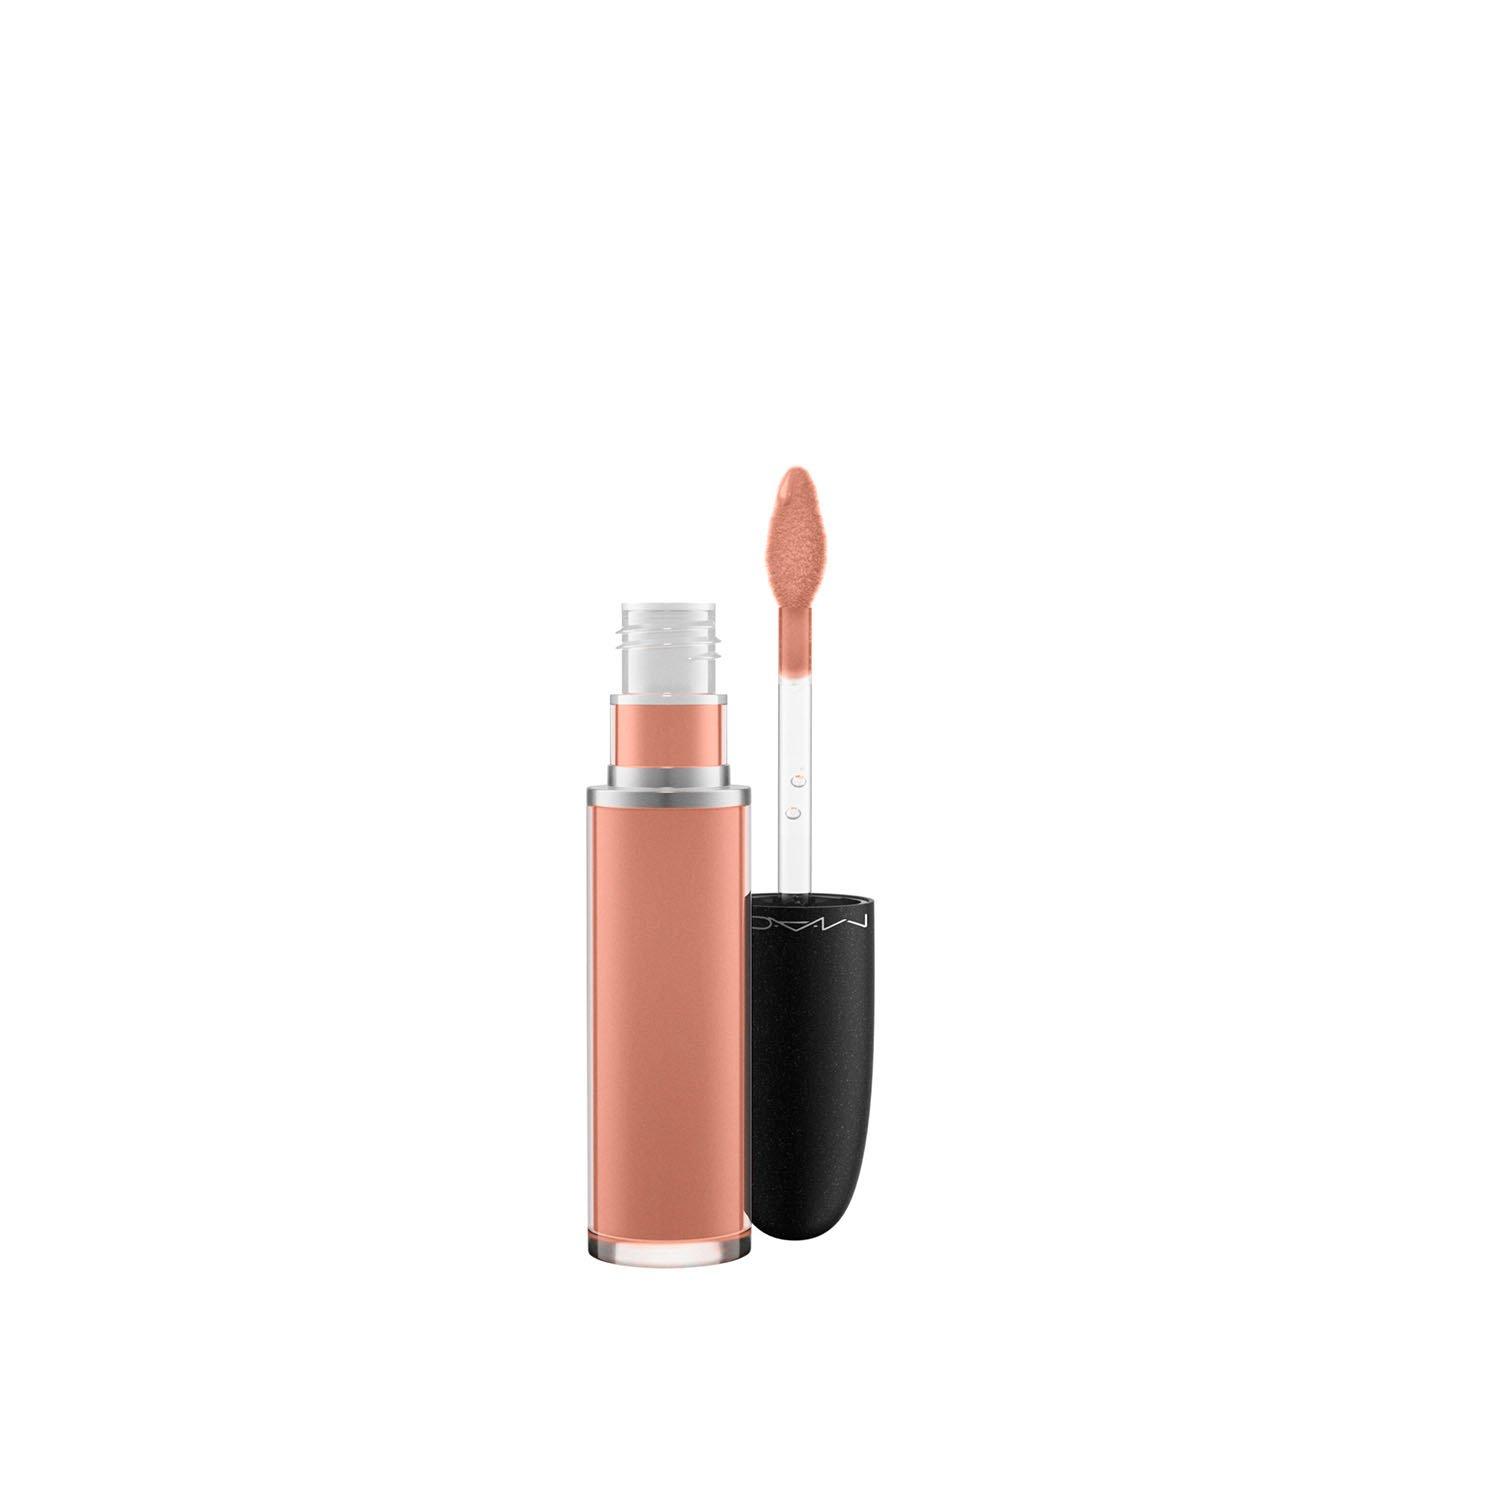 Retro Matte Liquid Lip Colour Damen Burnt Spice Creamy dirty rose 5ml von MAC Cosmetics